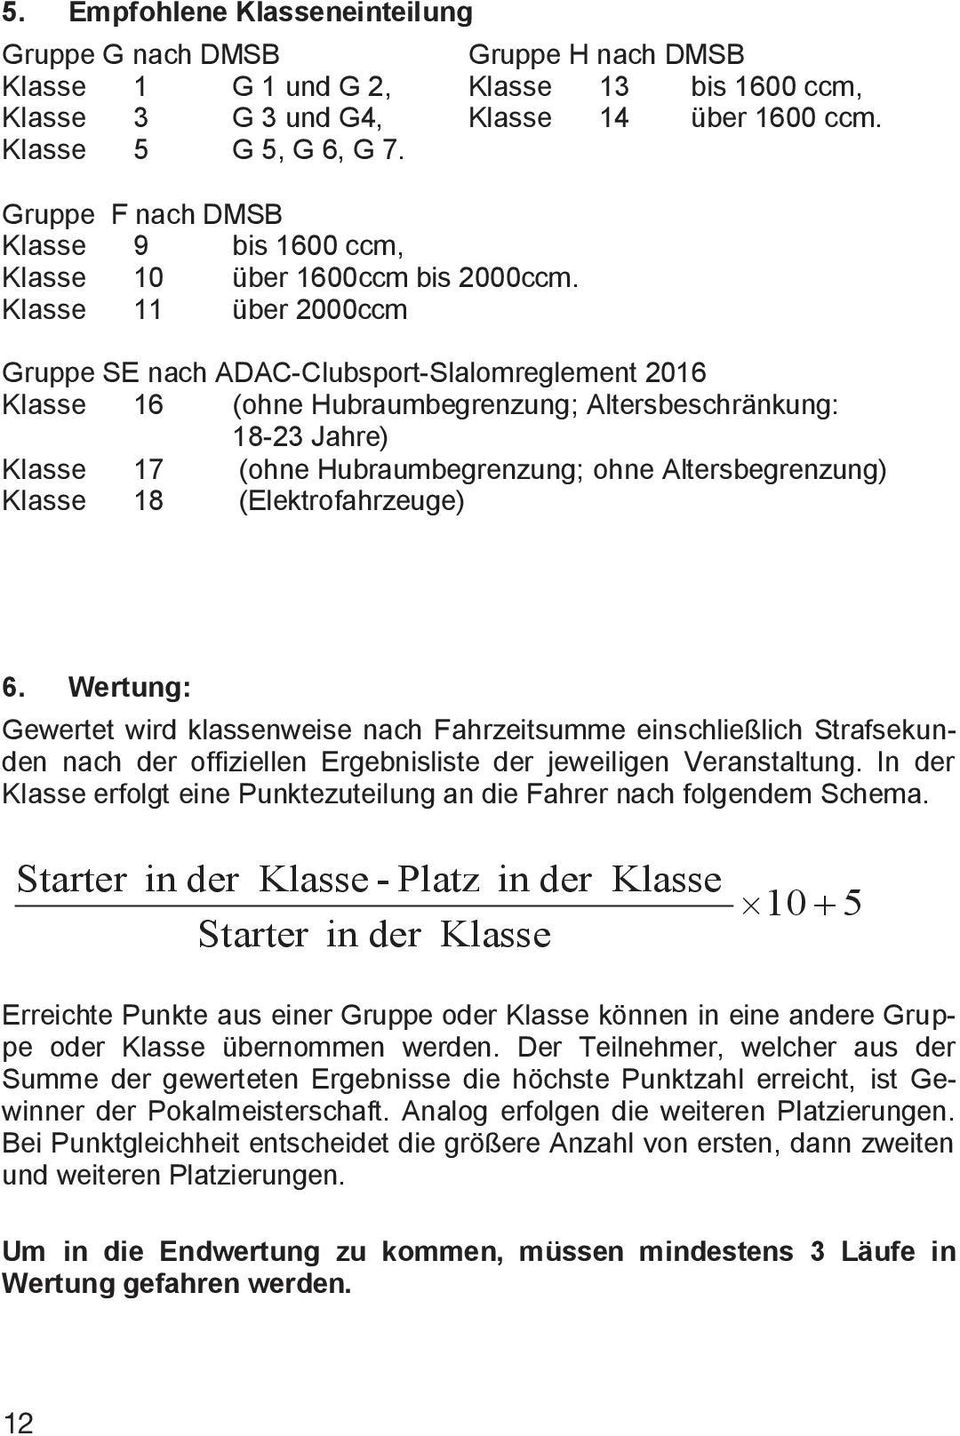 Klasse 11 über 2000ccm Gruppe SE nach ADAC-Clubsport-Slalomreglement 2016 Klasse 16 (ohne Hubraumbegrenzung; Altersbeschränkung: 18-23 Jahre) Klasse 17 (ohne Hubraumbegrenzung; ohne Altersbegrenzung)